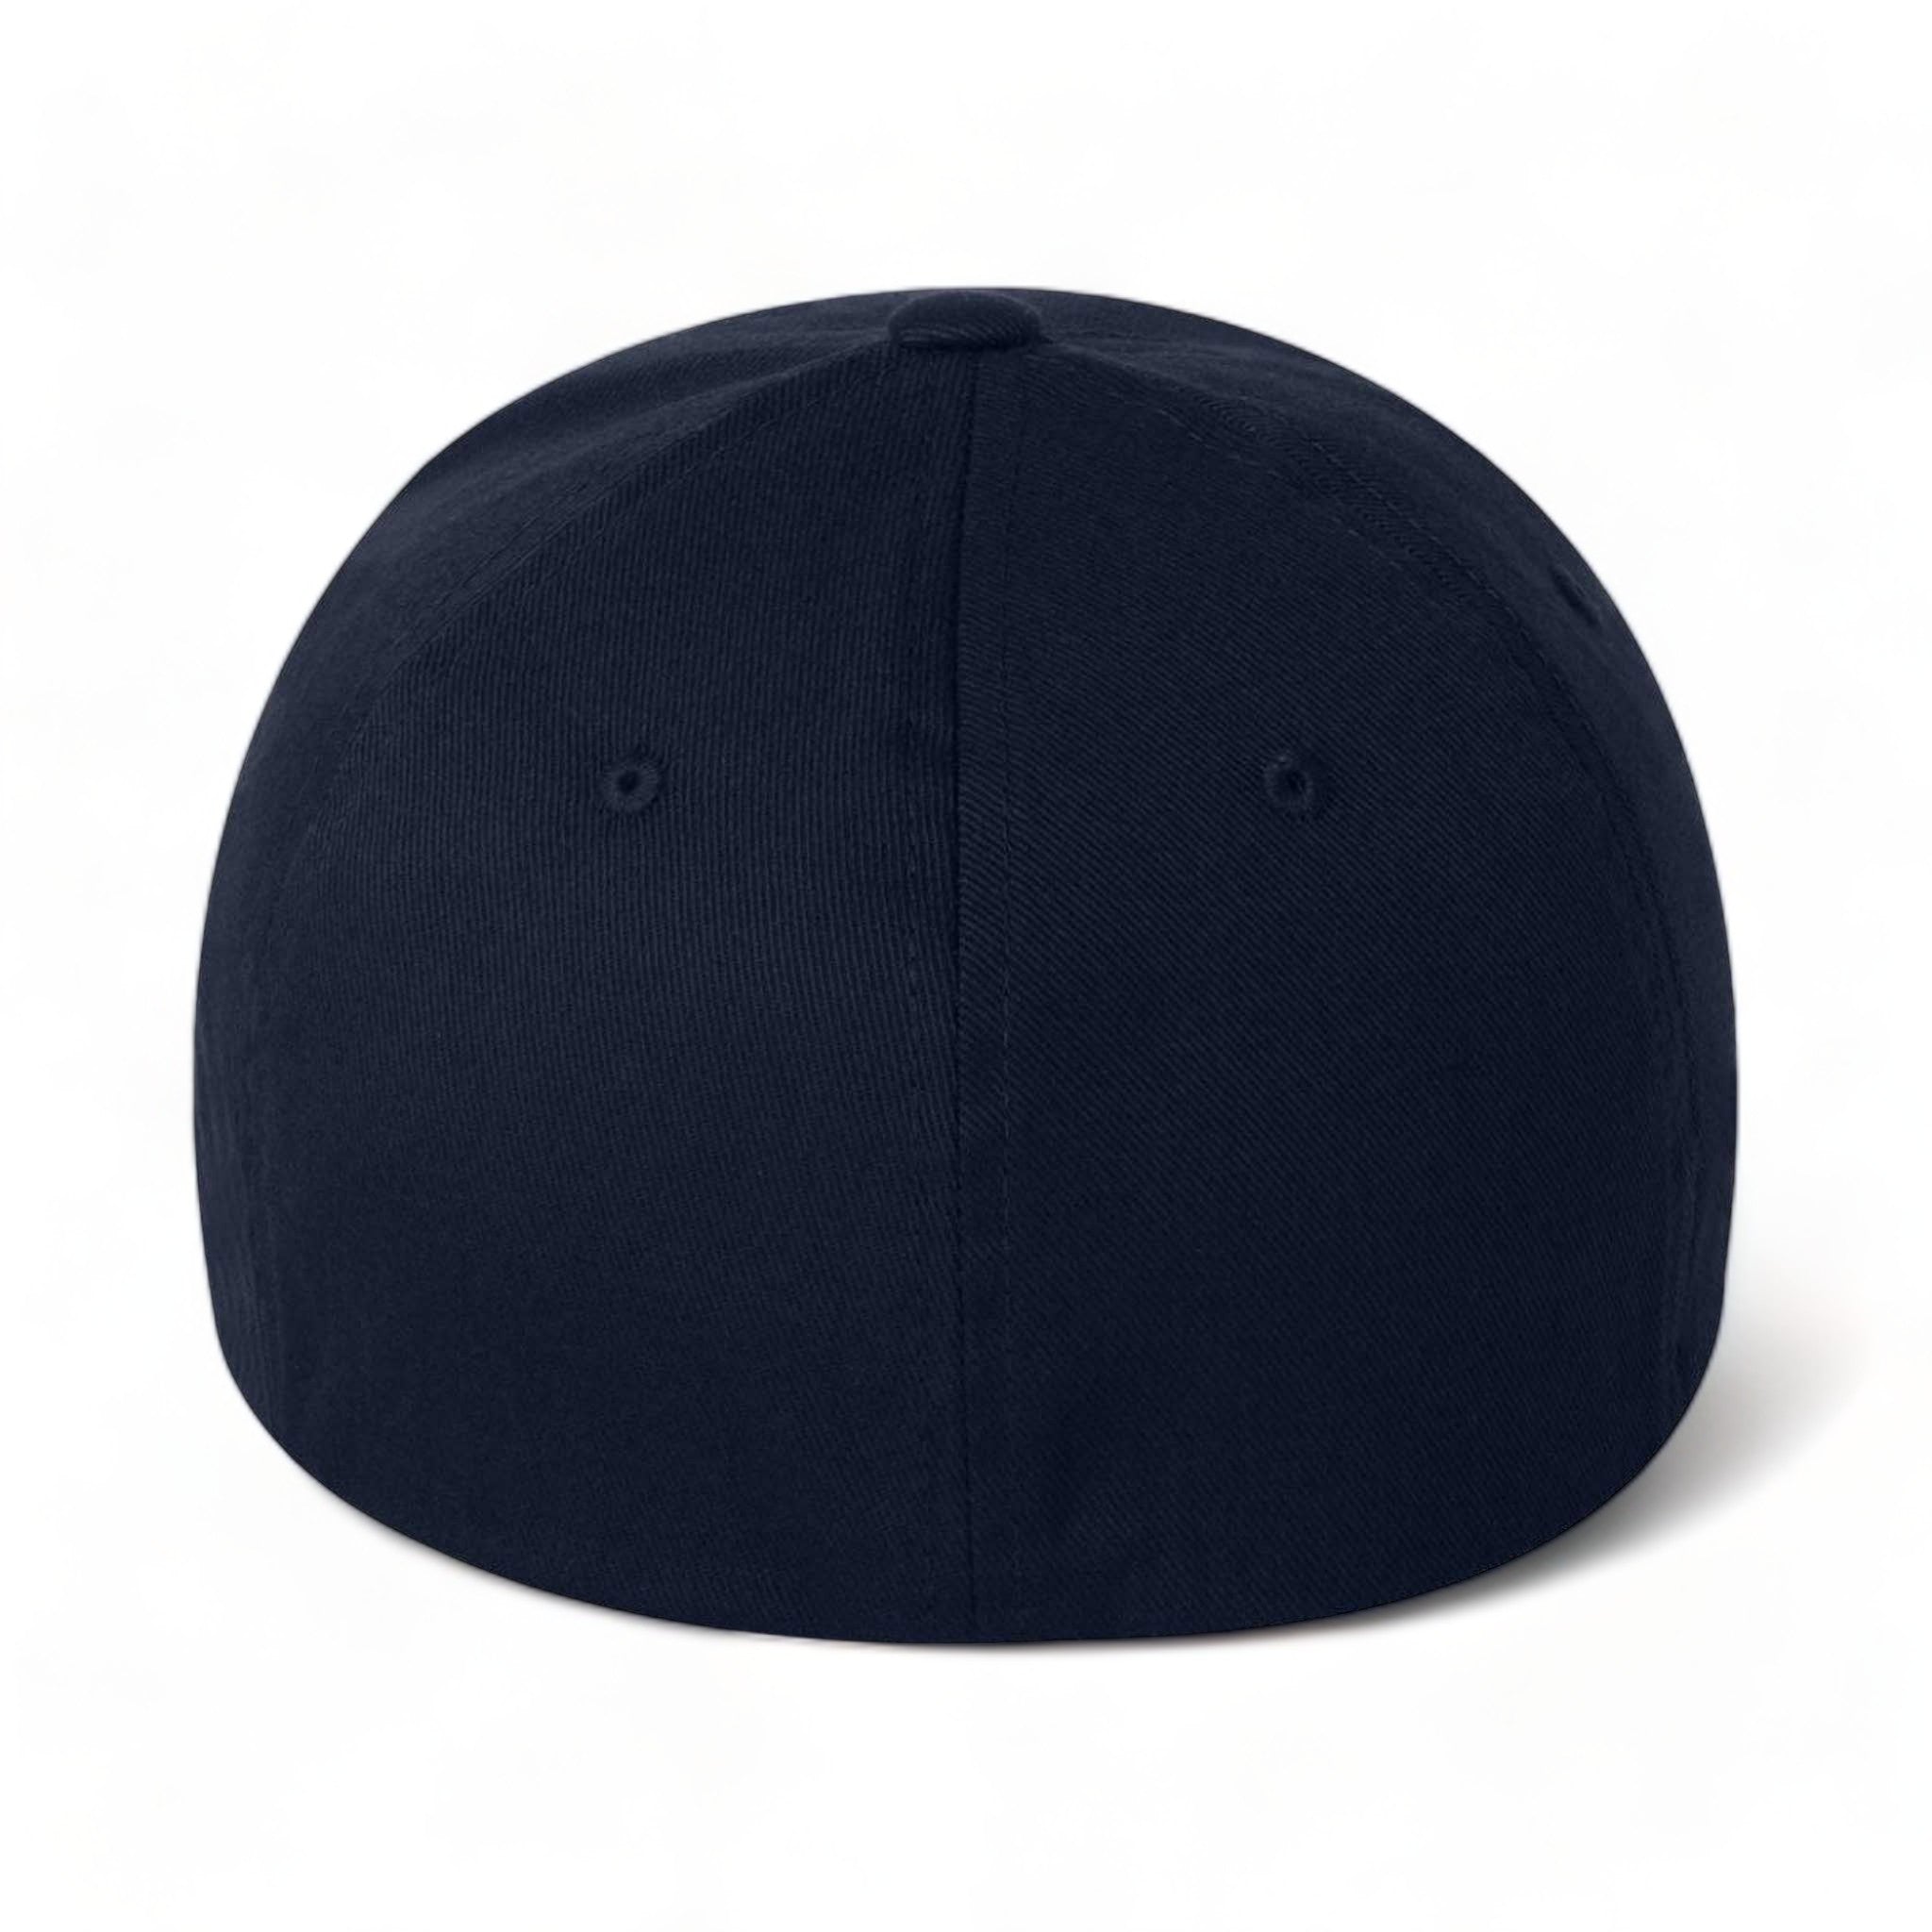 Back view of Flexfit 6277 custom hat in dark navy